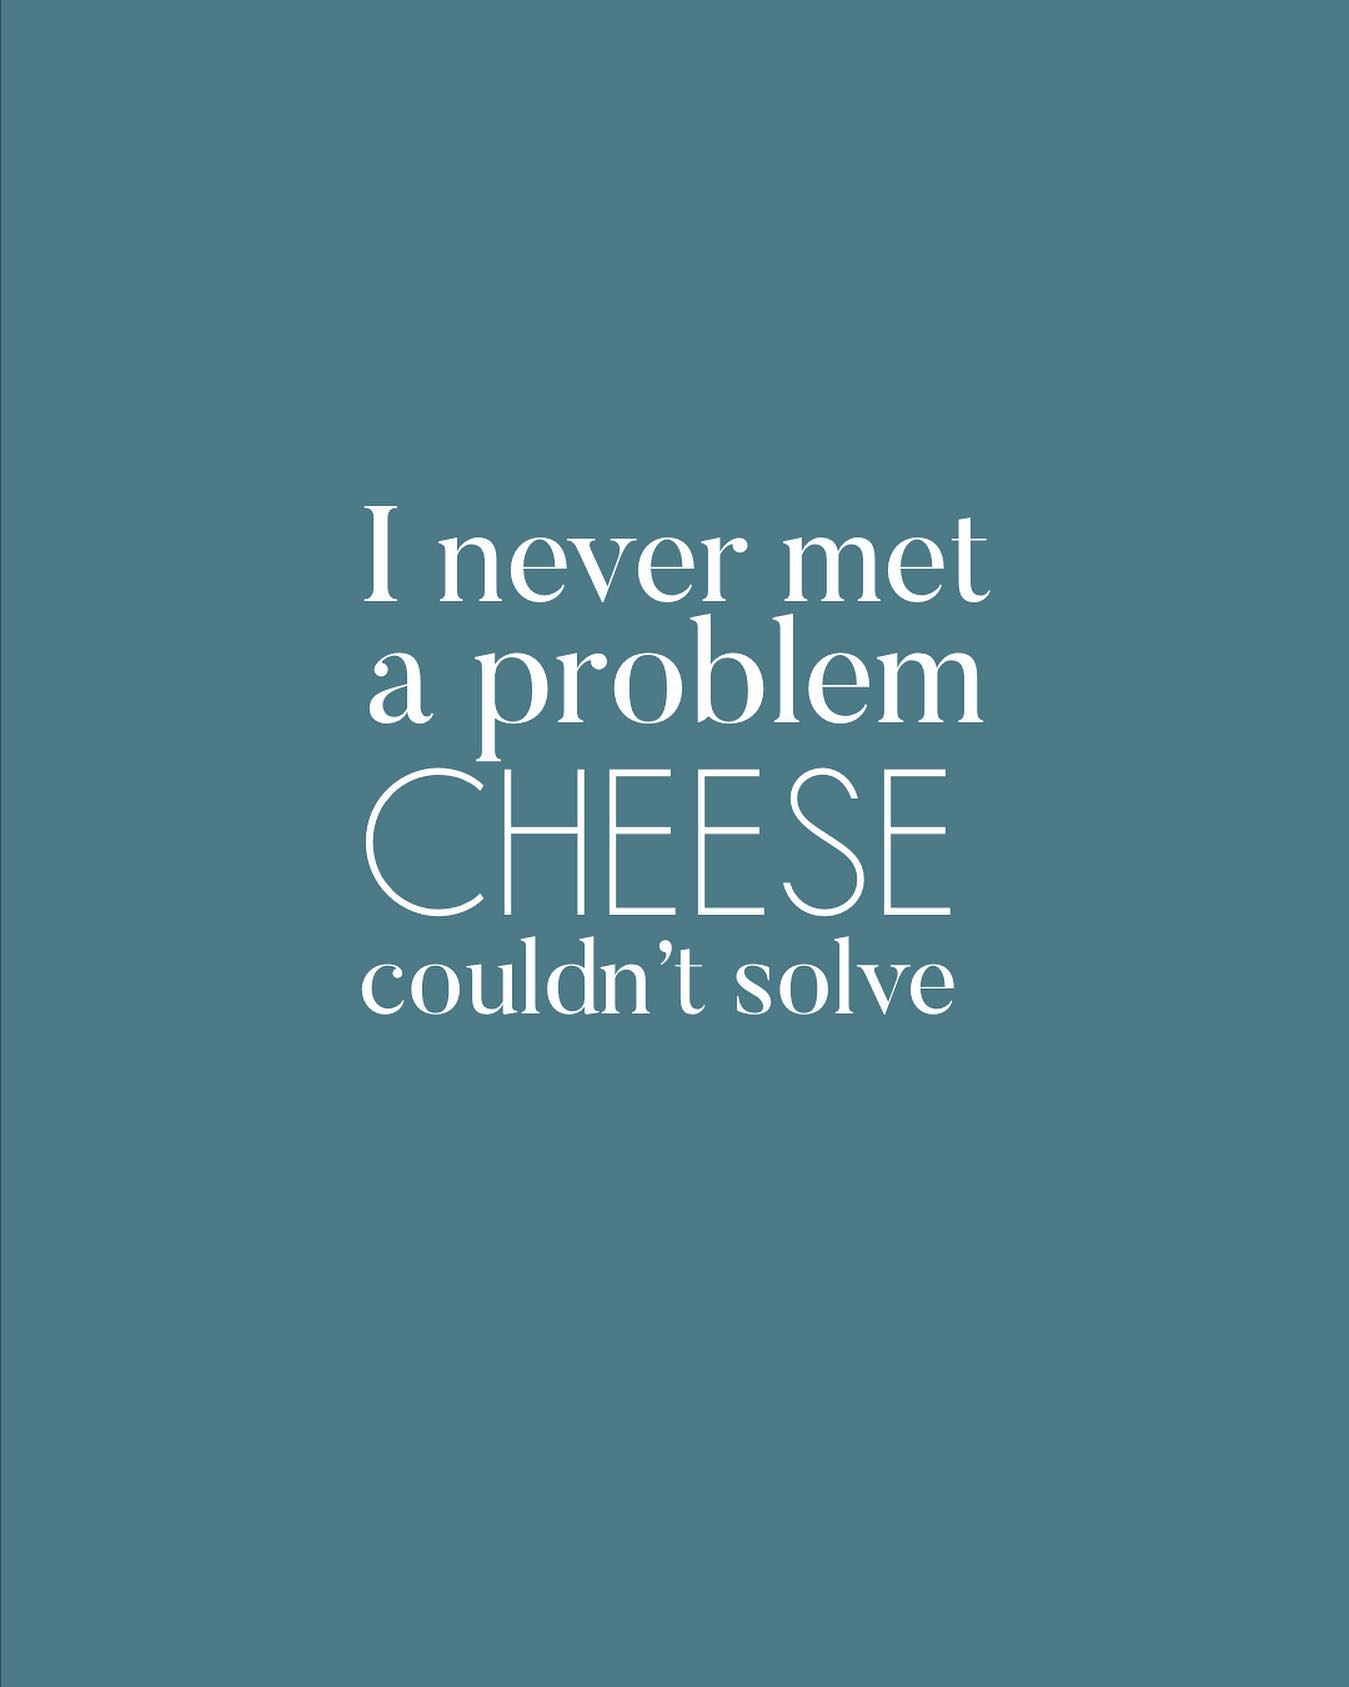 Og så er dét sagt. 
Basta. 
🧀🧀🧀
.
.
.

#ostesnak #cheesetalks #cheese #cheeseislife #cheeselovers #instacheese #cheeseplease #ost #cheeseblogger #foodie #fromage #cheeseblog #citat #ostecitat #quote #cheesequote #fromage #queso